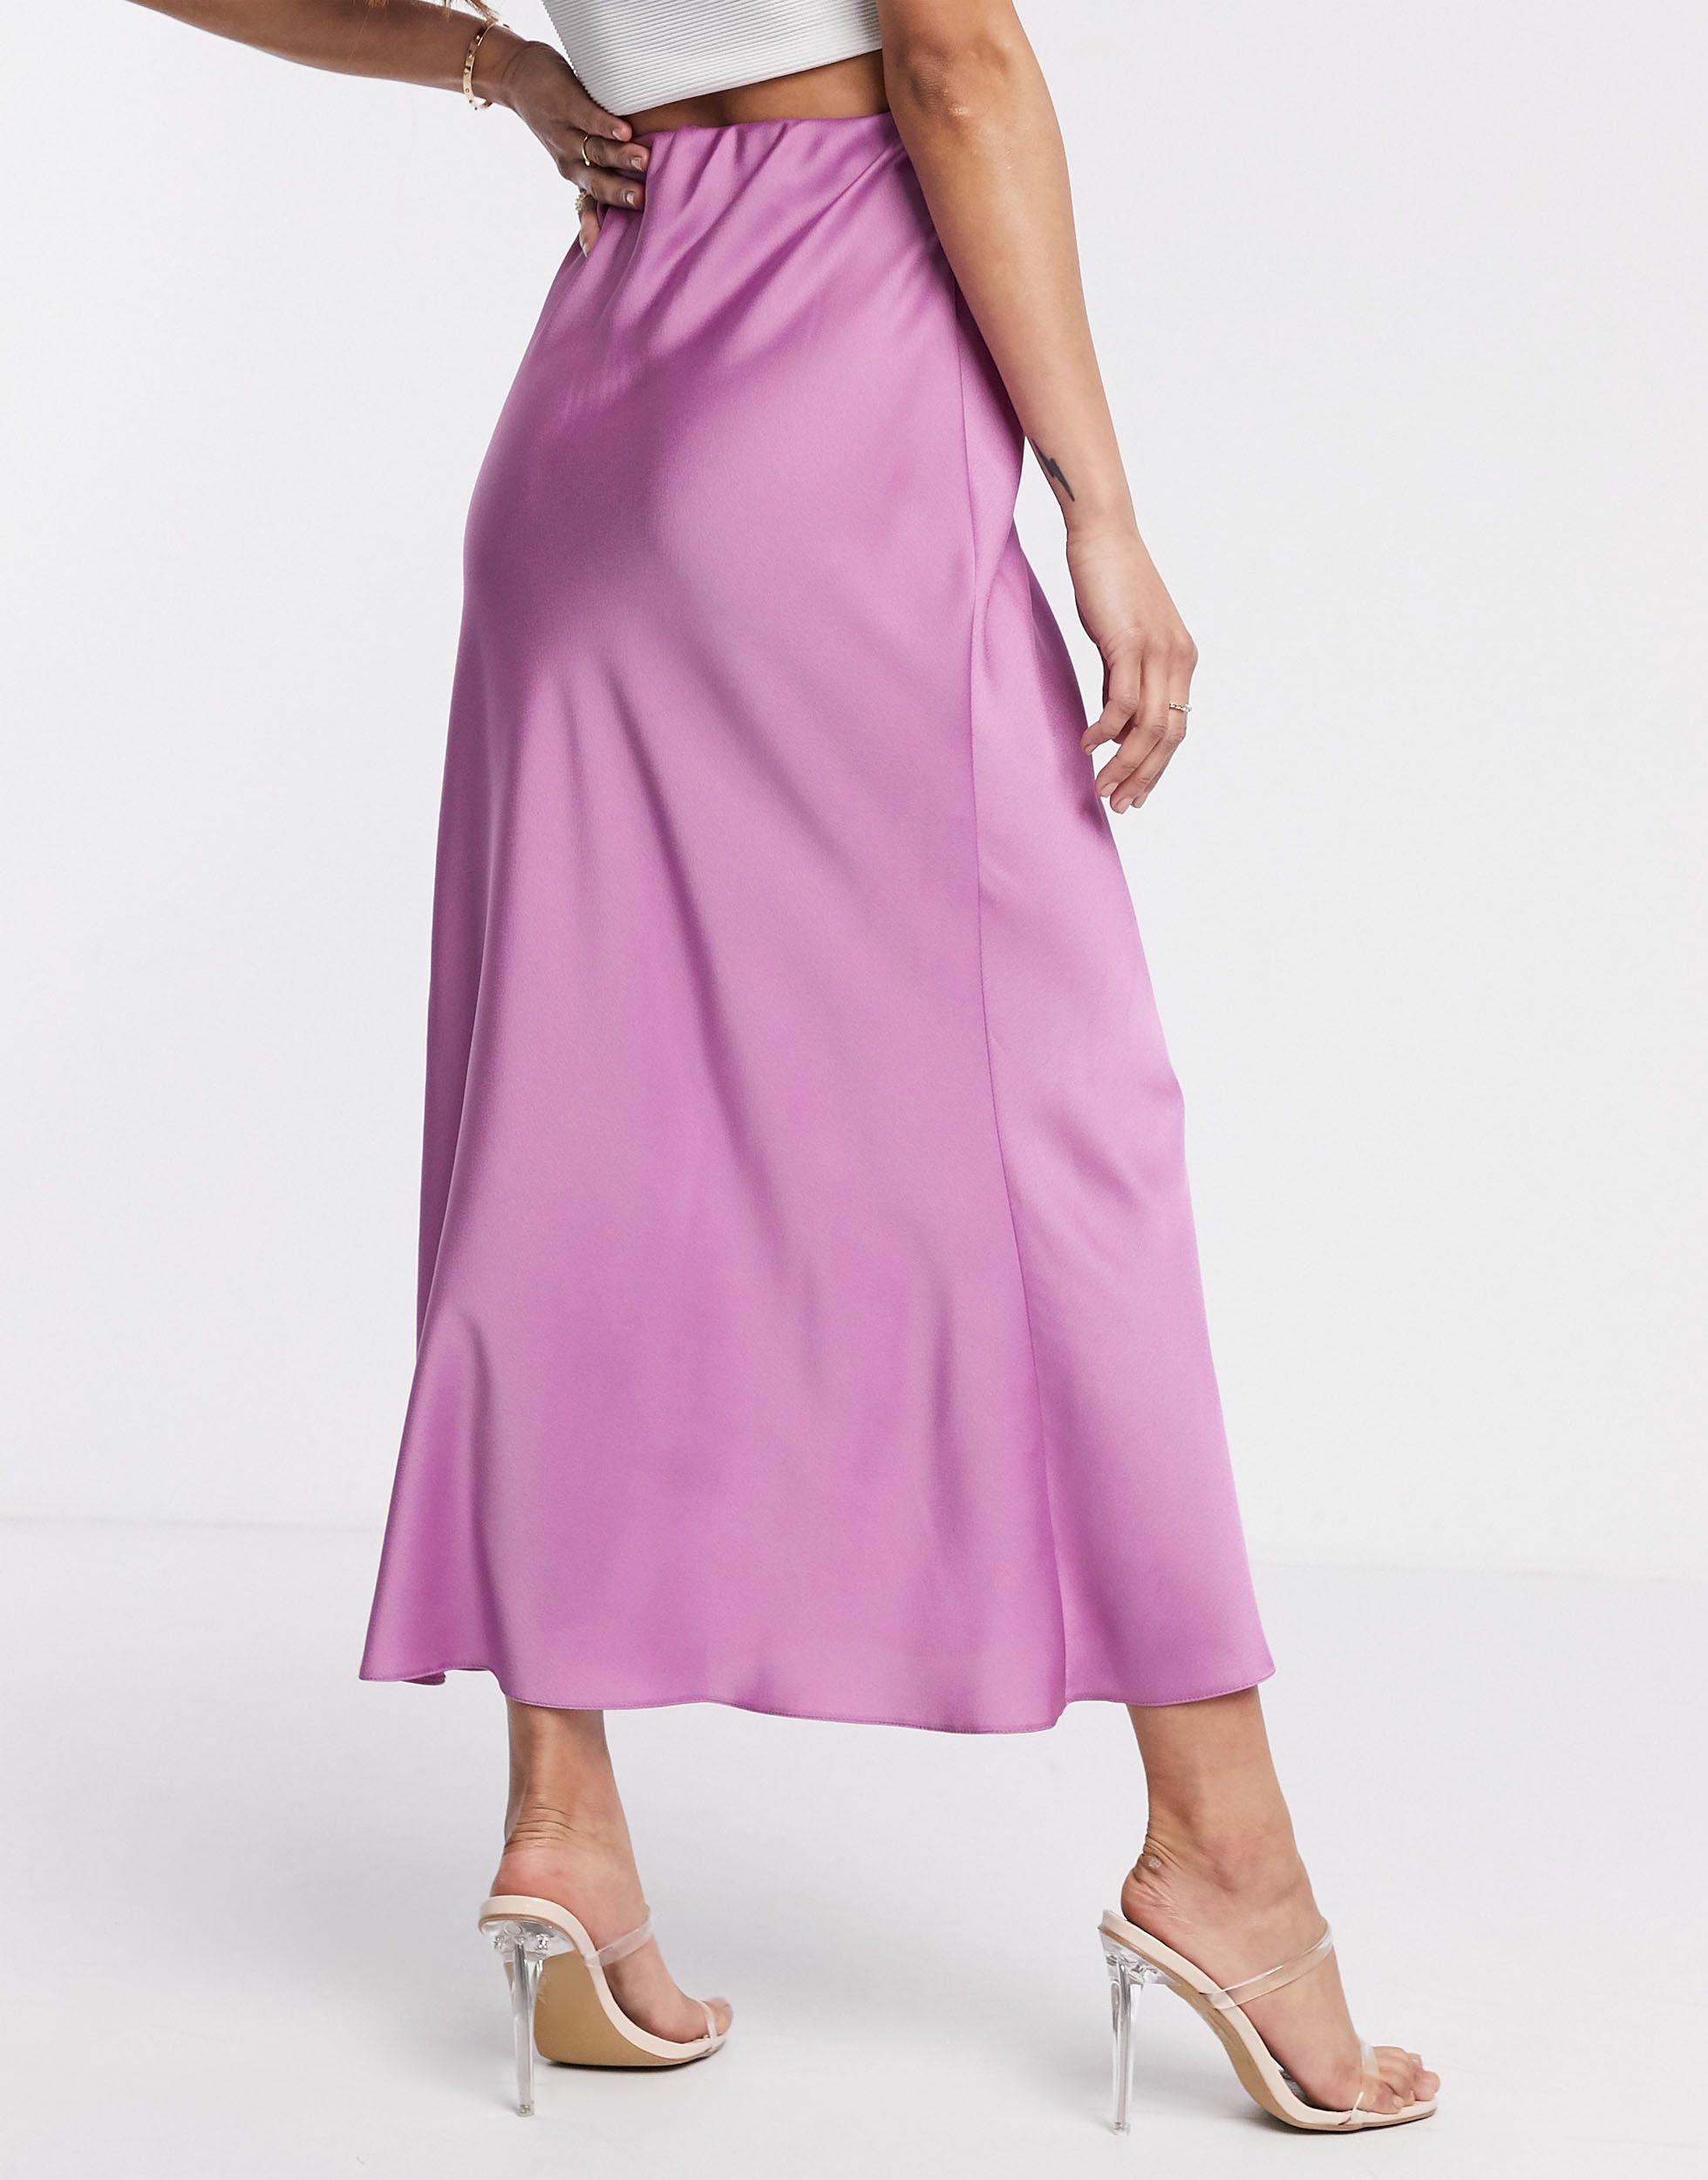 ASOS Bias Cut Satin Slip Midi Skirt in Purple - Lyst